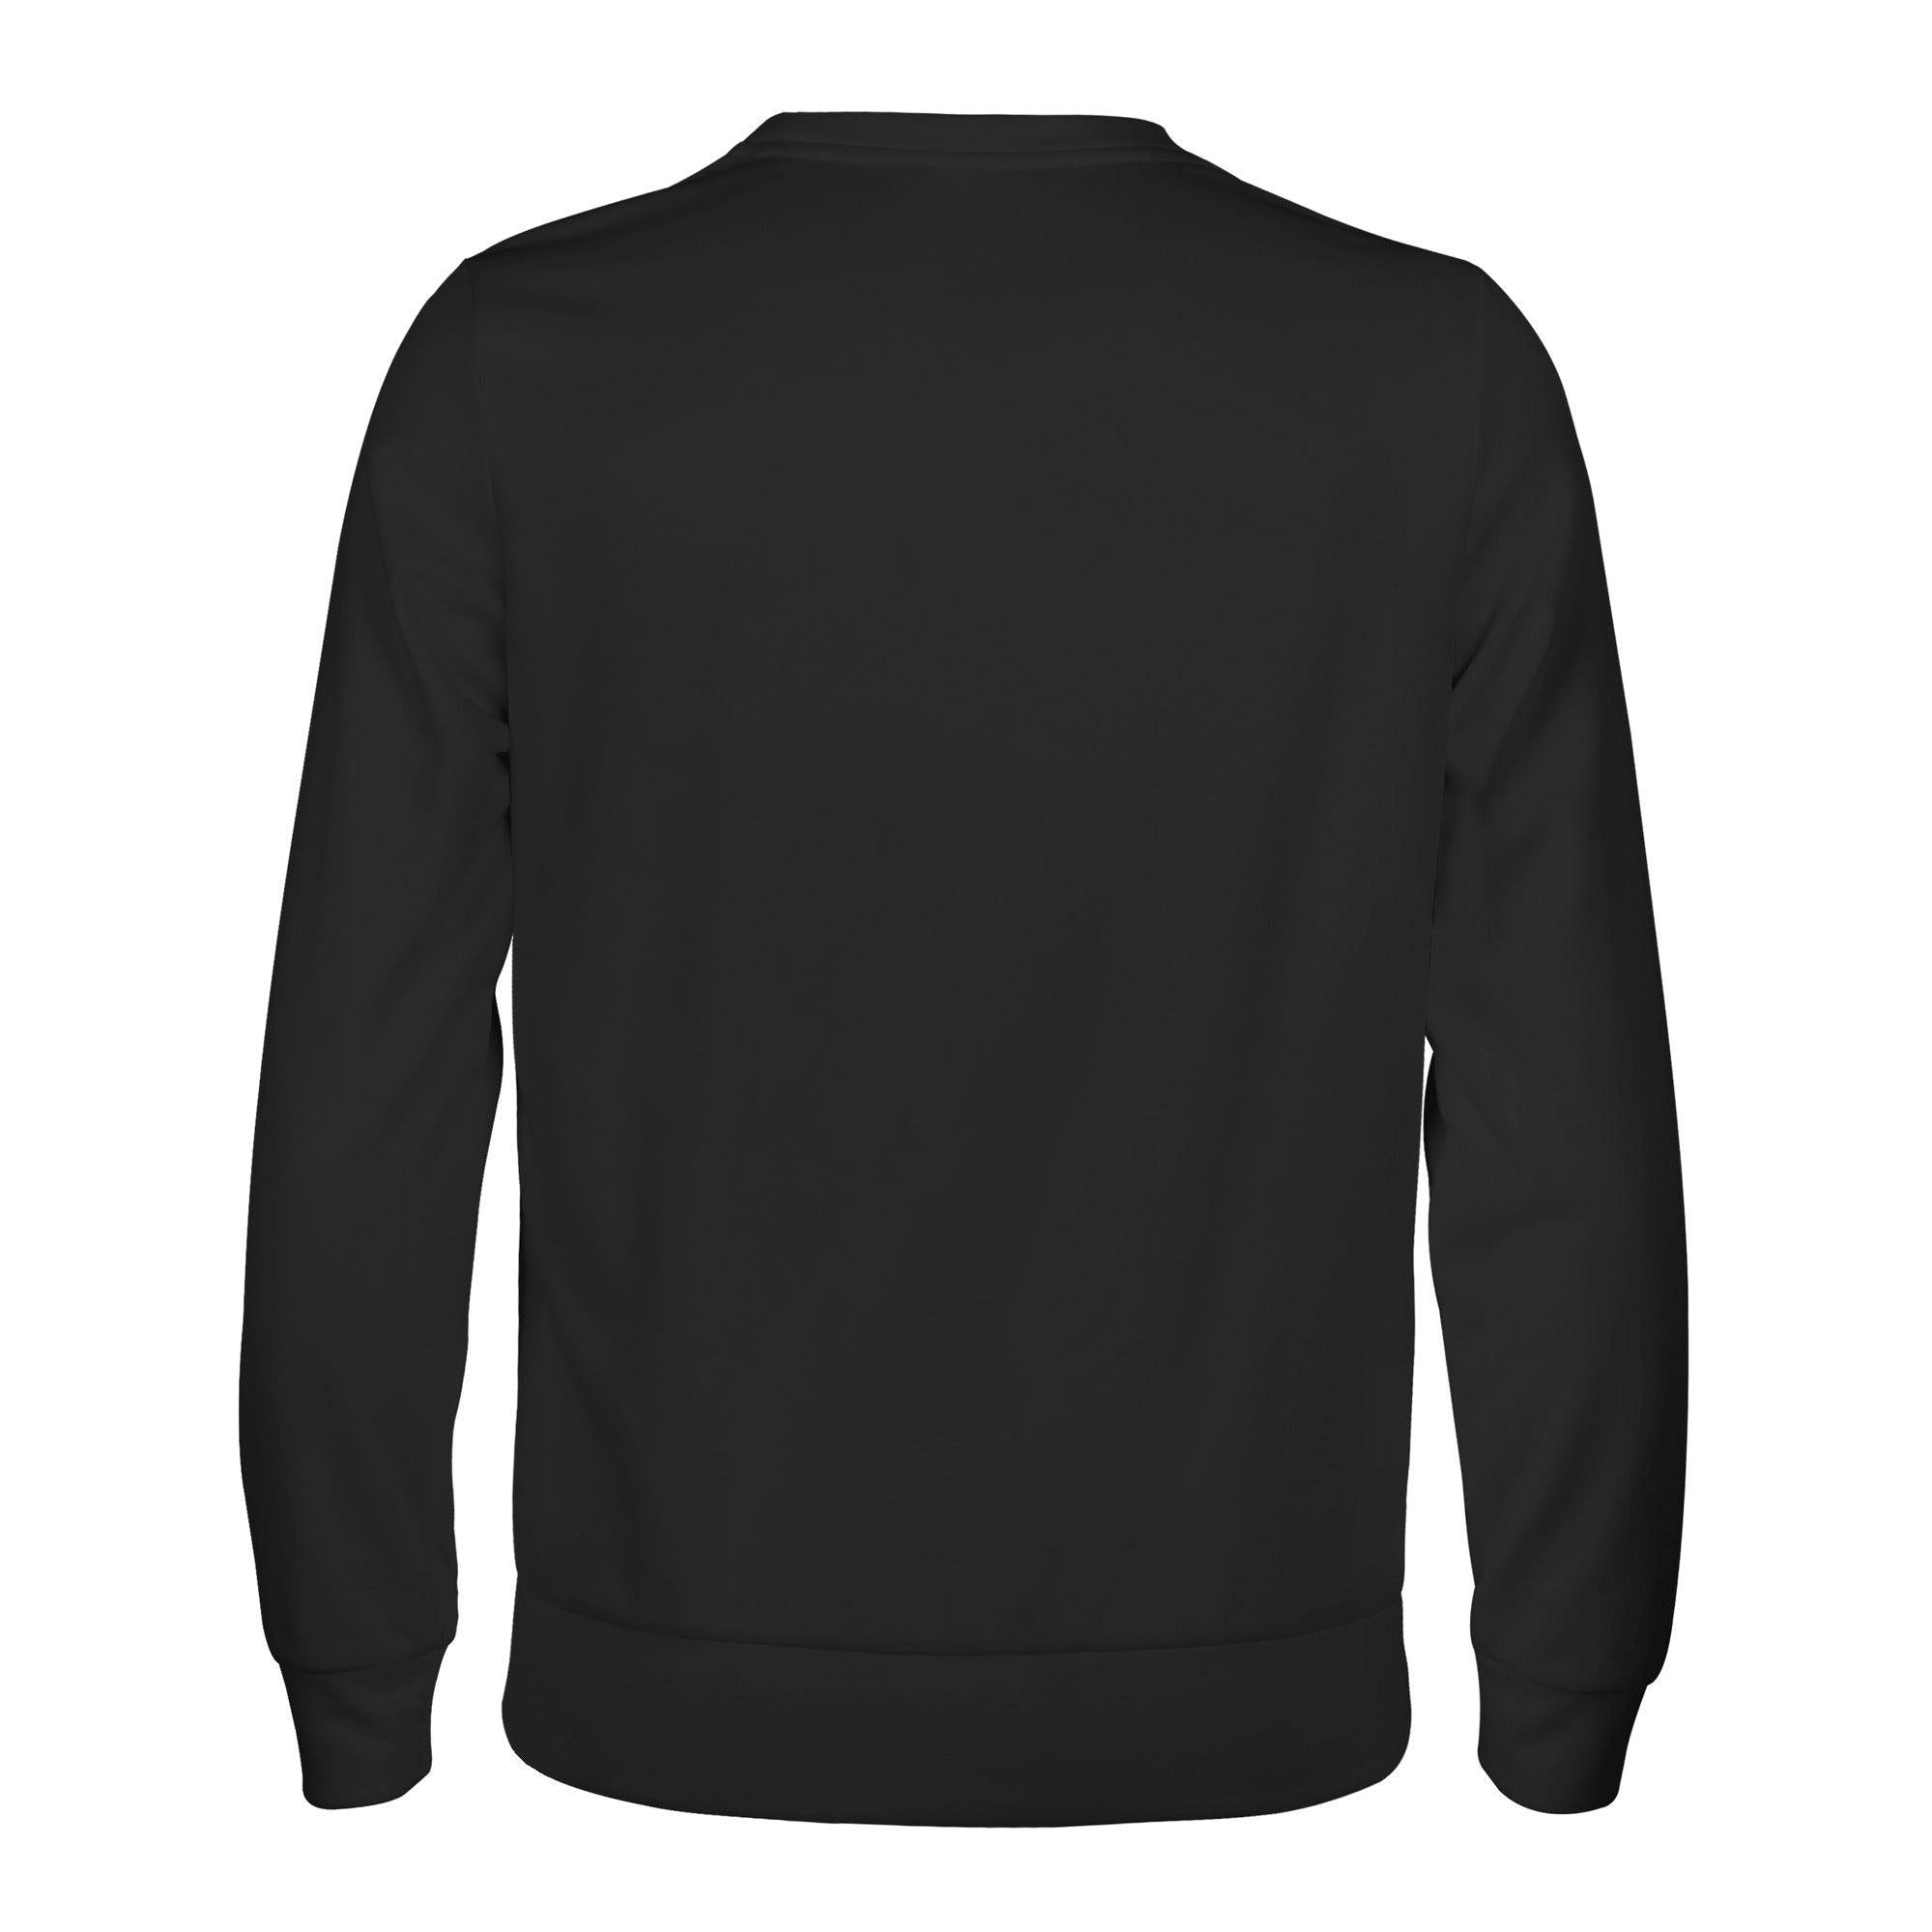 SmartCosmicMonkey Sweater (Lv.1) - Kanivee Customs